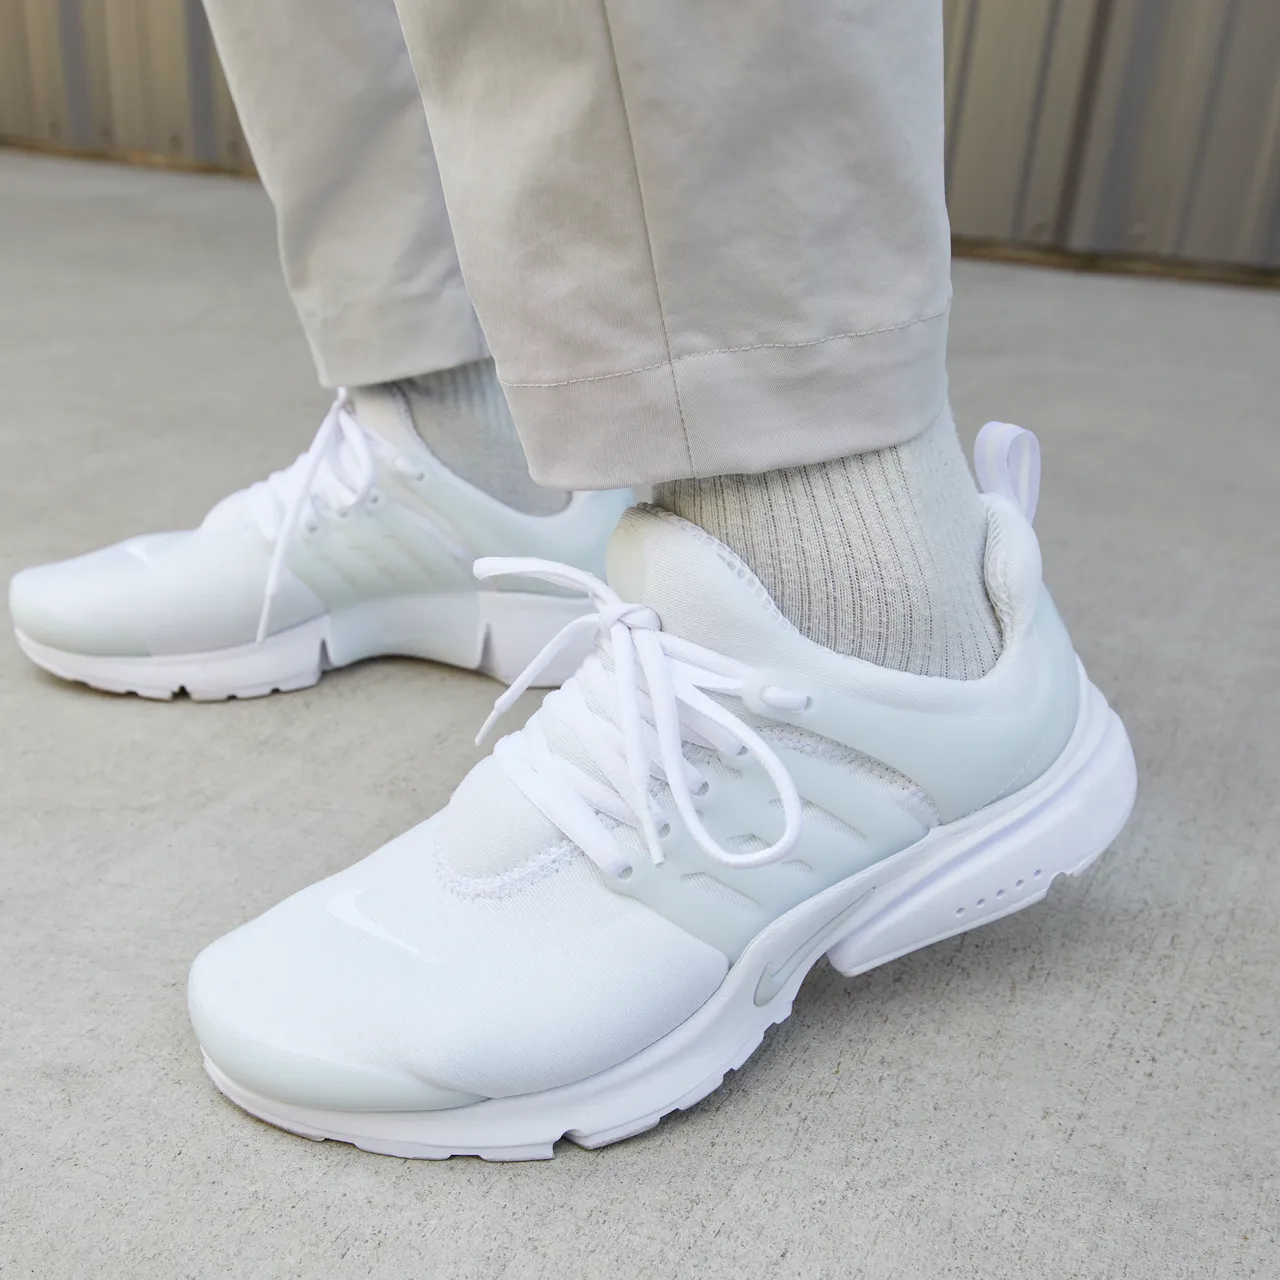 Nike Air Presto Men's Shoes - White